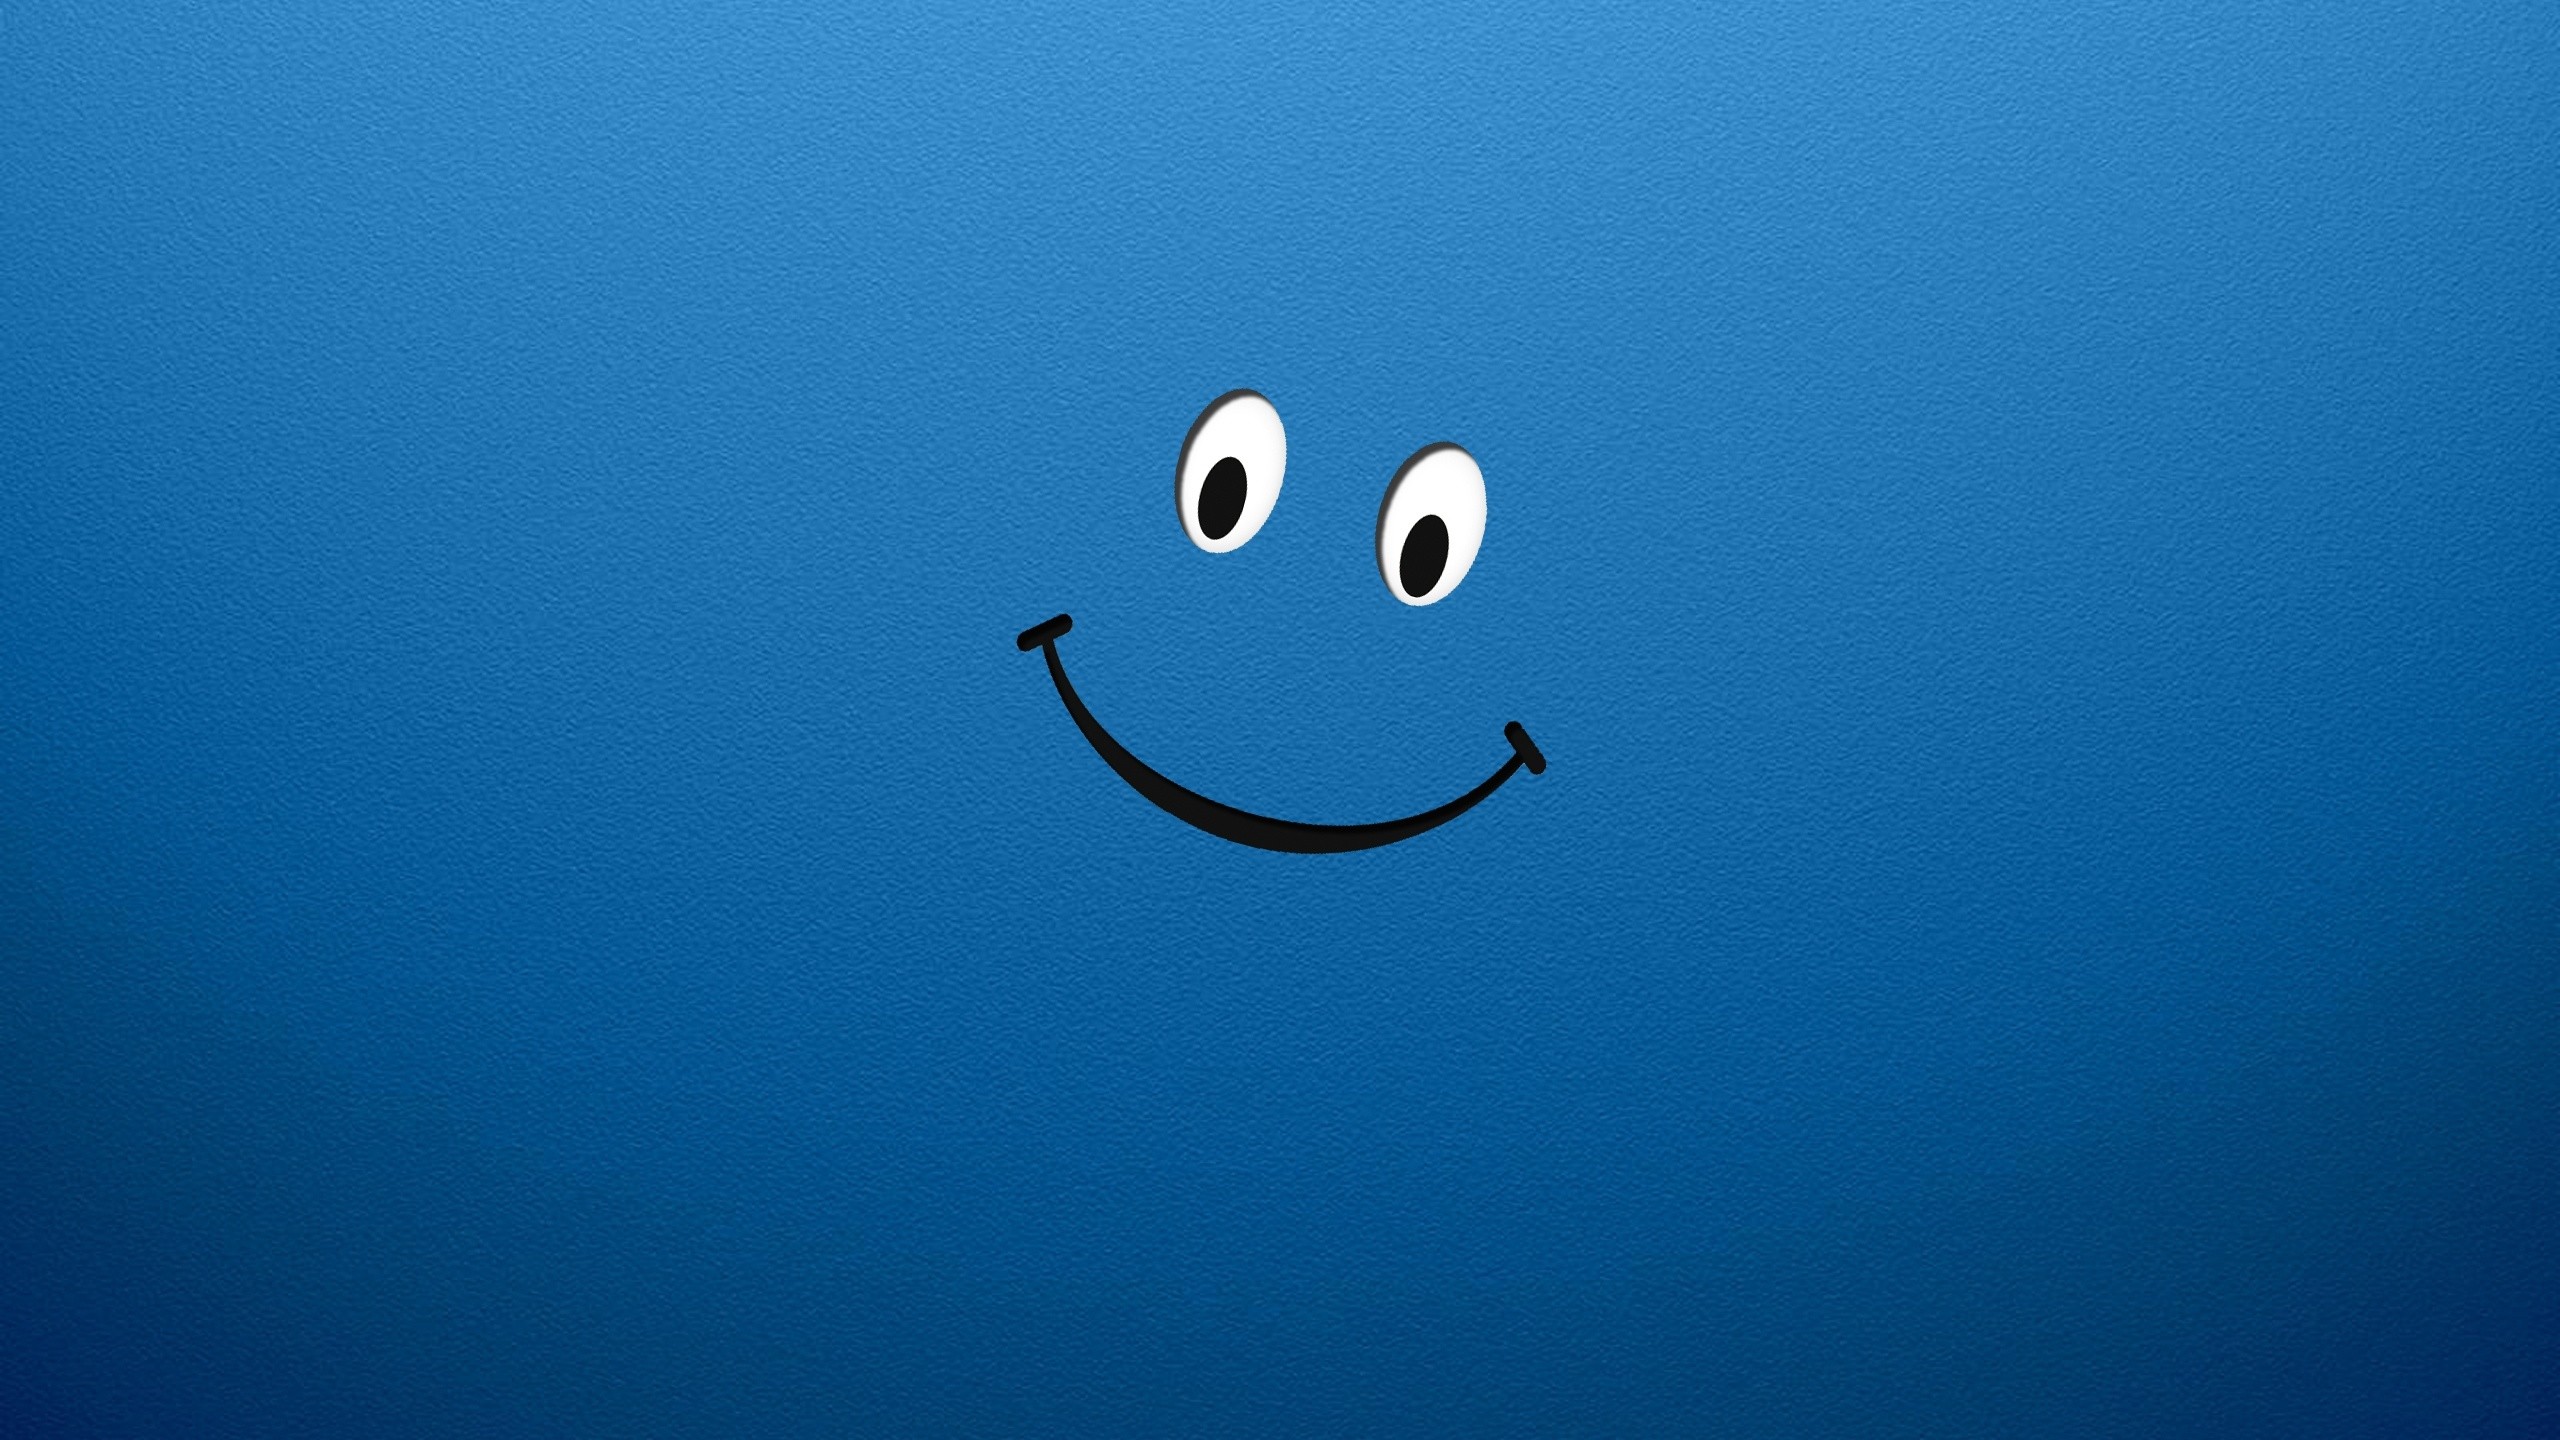 Smiley Face Wallpaper 2560x1440 Smiley Face Smiling Blue Smile